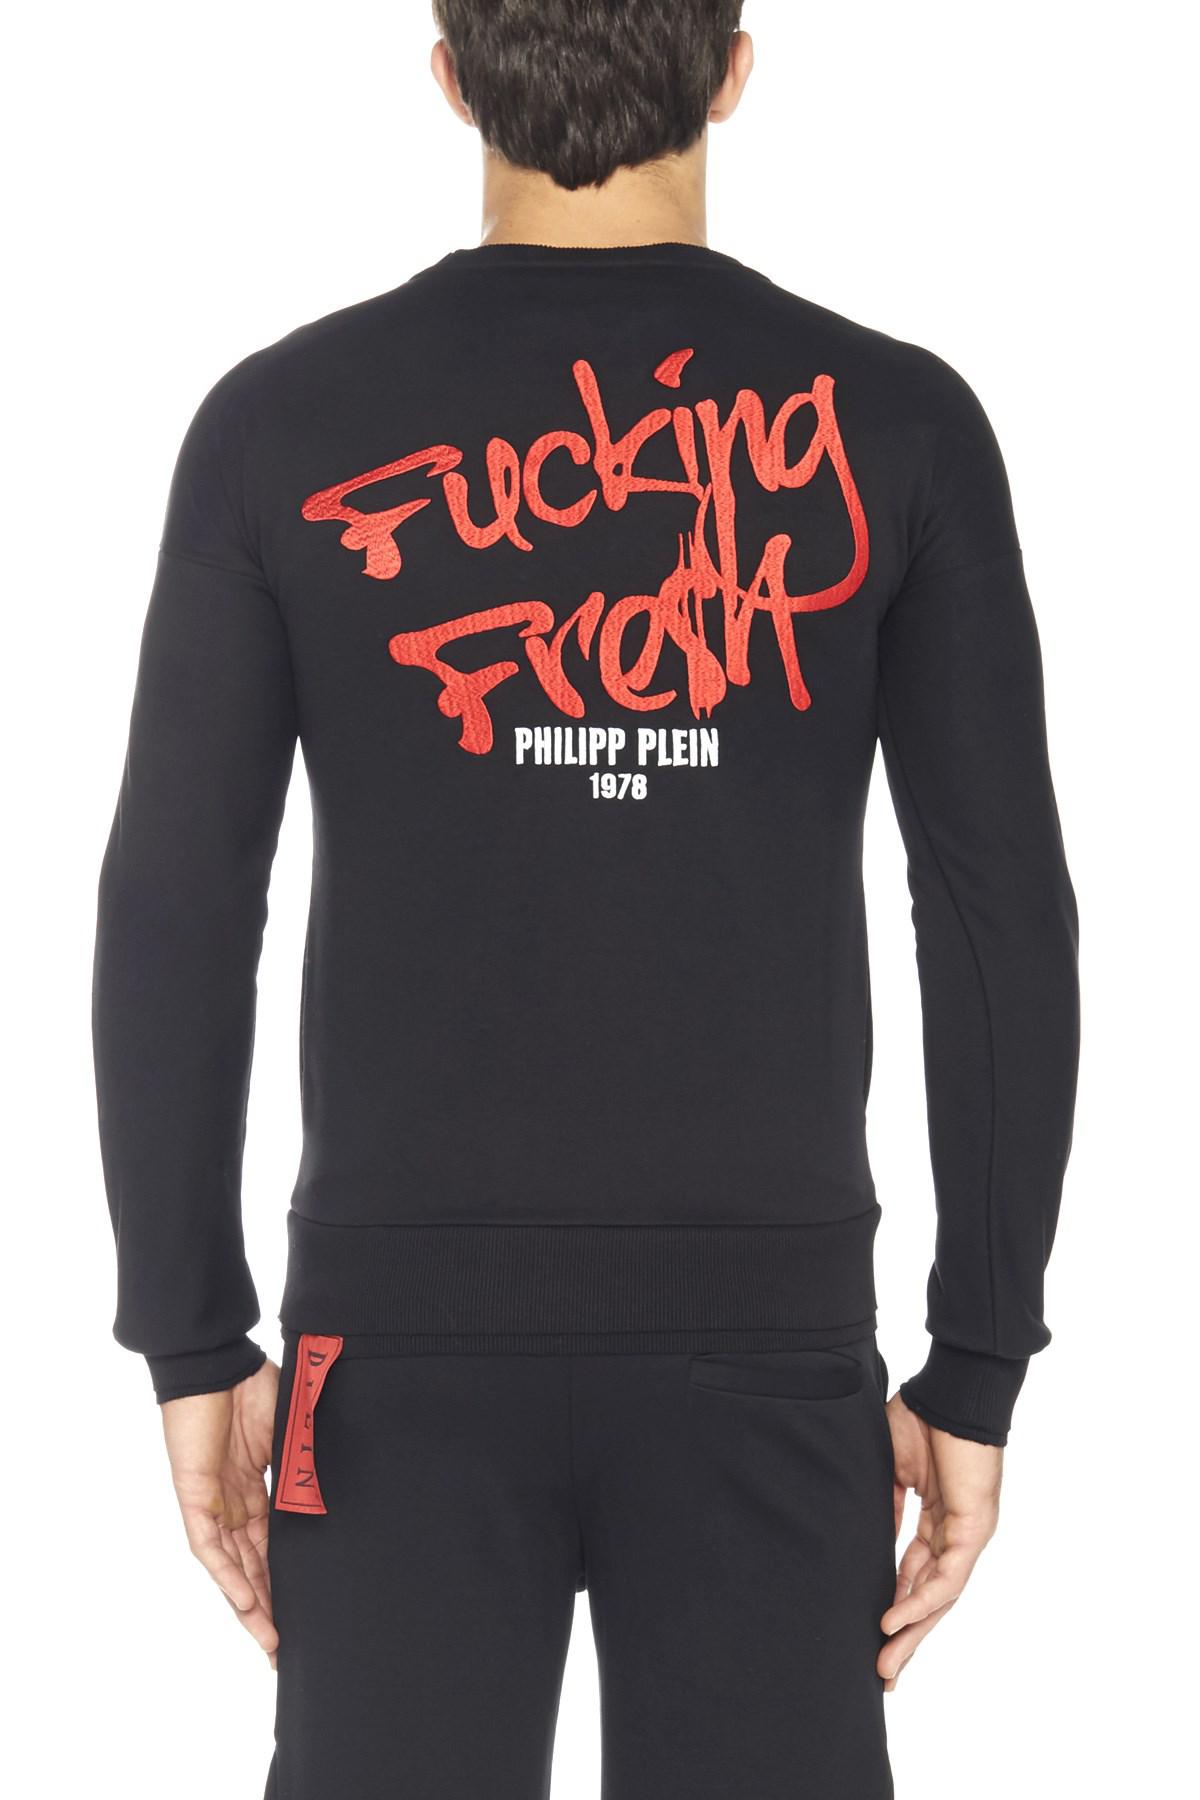 Philipp Plein Cotton 'fucking Fresh' Sweatshirt in Black for Men - Lyst